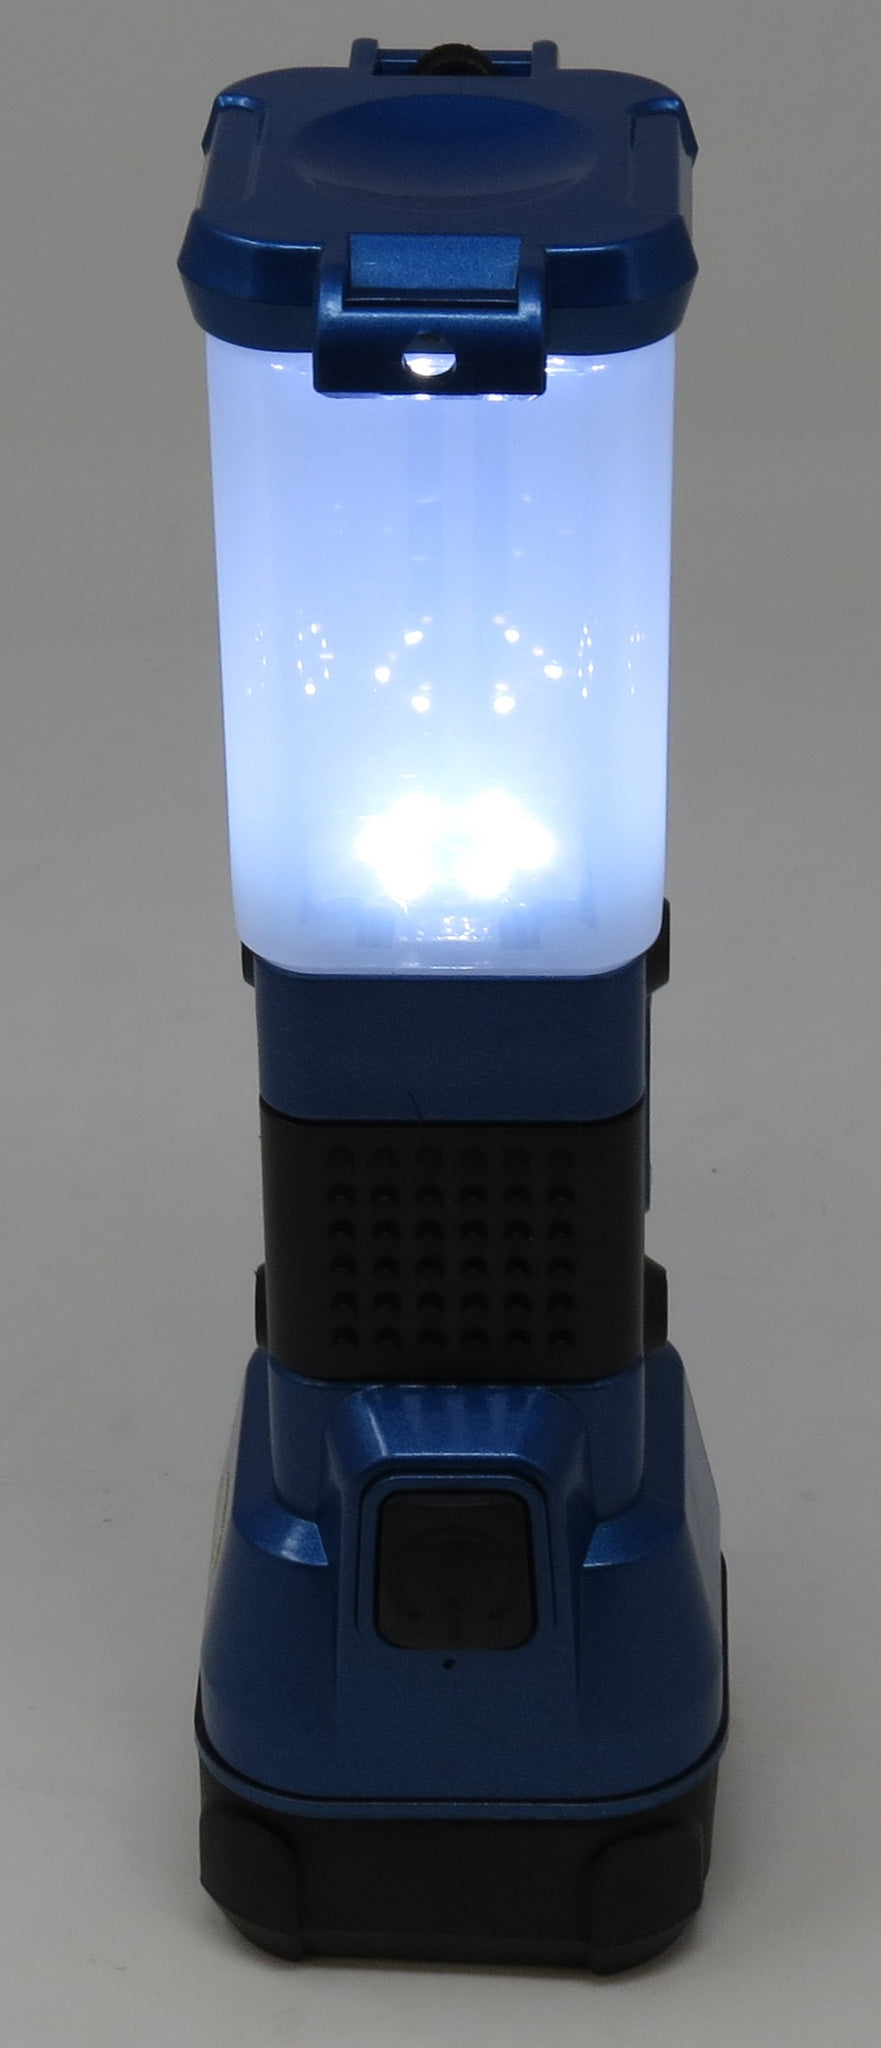 Emergency LED AA Light All-in-One LED Flashlight and Lantern